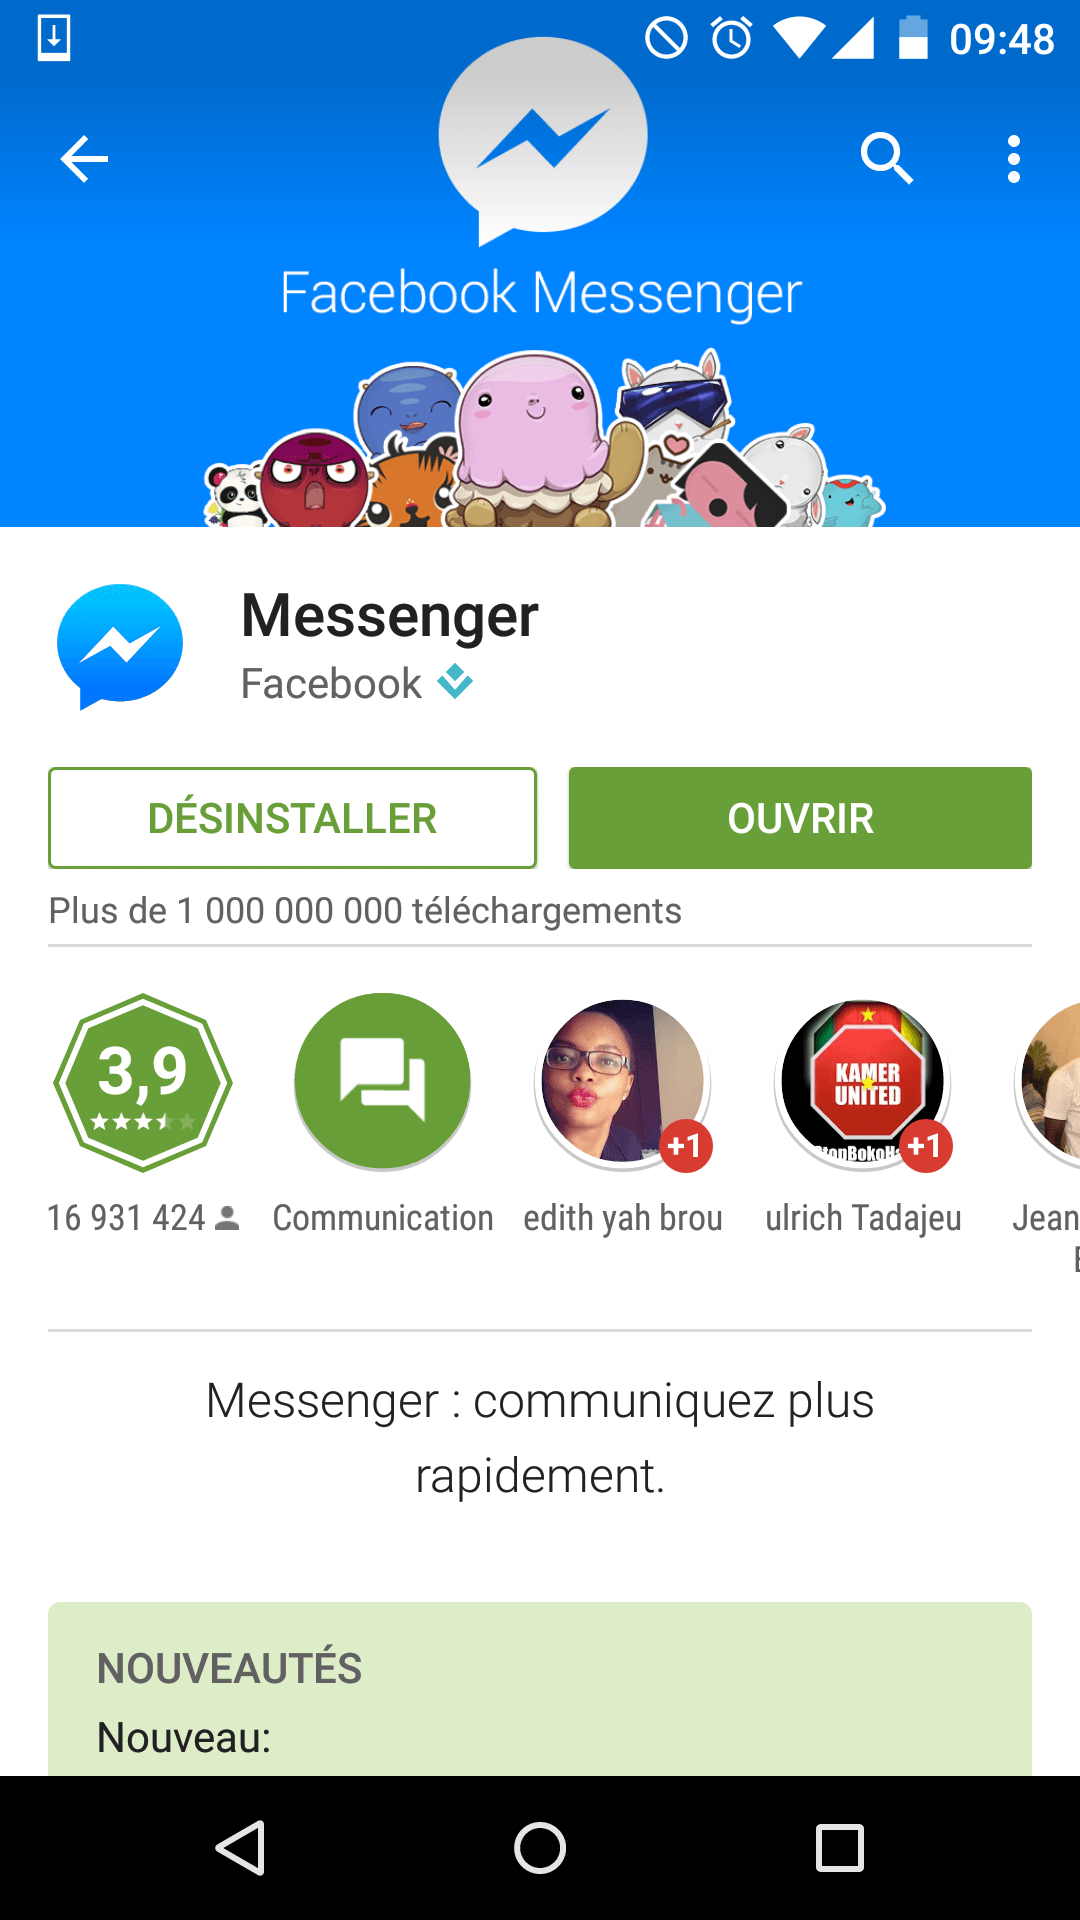 Facebook messenger 1 Billion